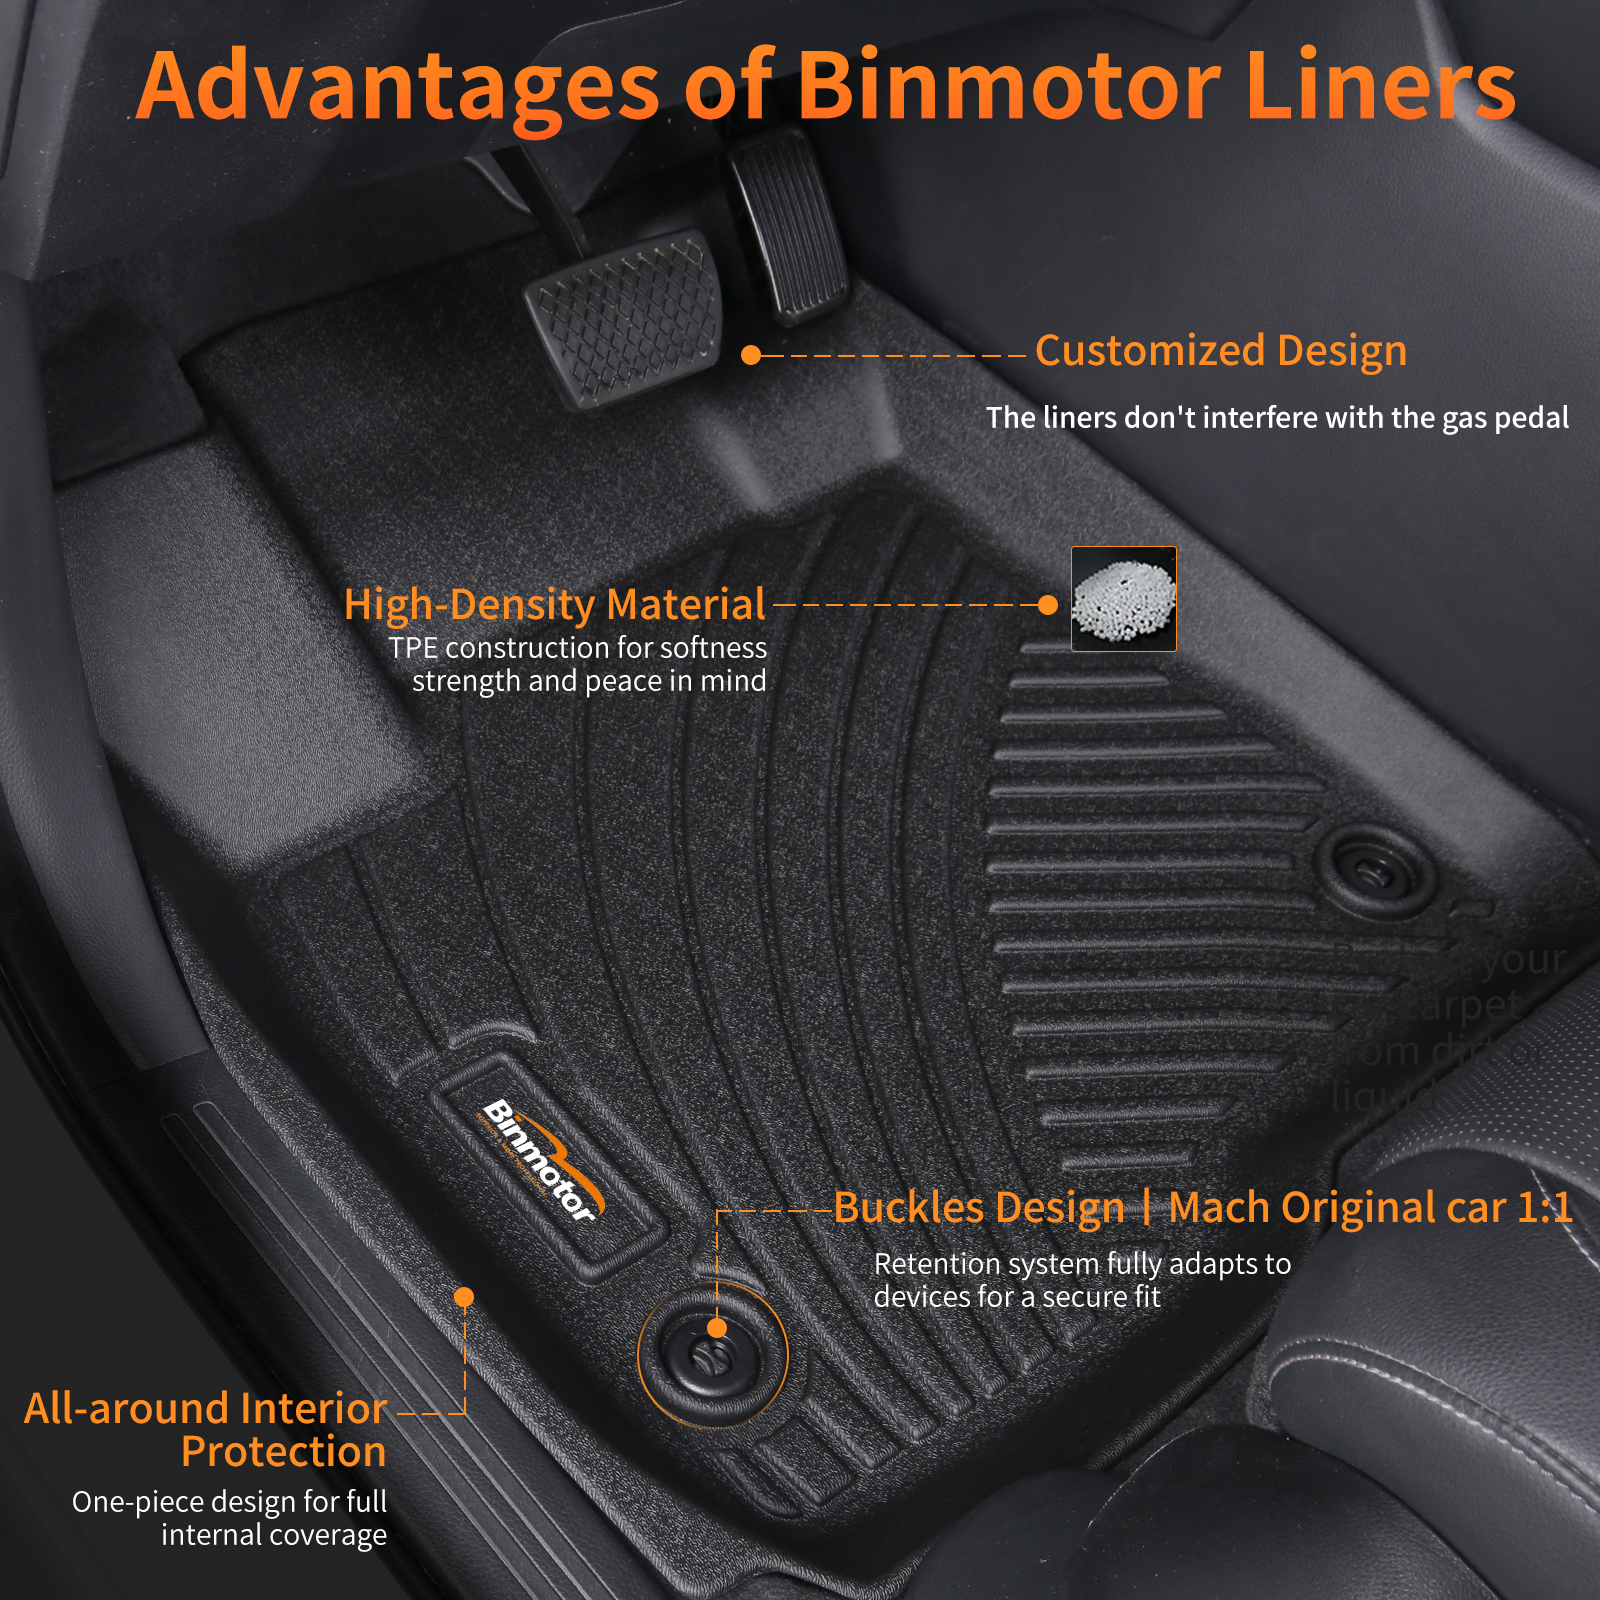 Binmotor-Floor Mats for Chevy/Chevrolet Colorado Crew Cab丨1st & 2nd Row丨All Weather Protection丨Heavy Duty Car Floor Mats for Chevy/Chevrolet Colorado（compatible year 2015-2022）